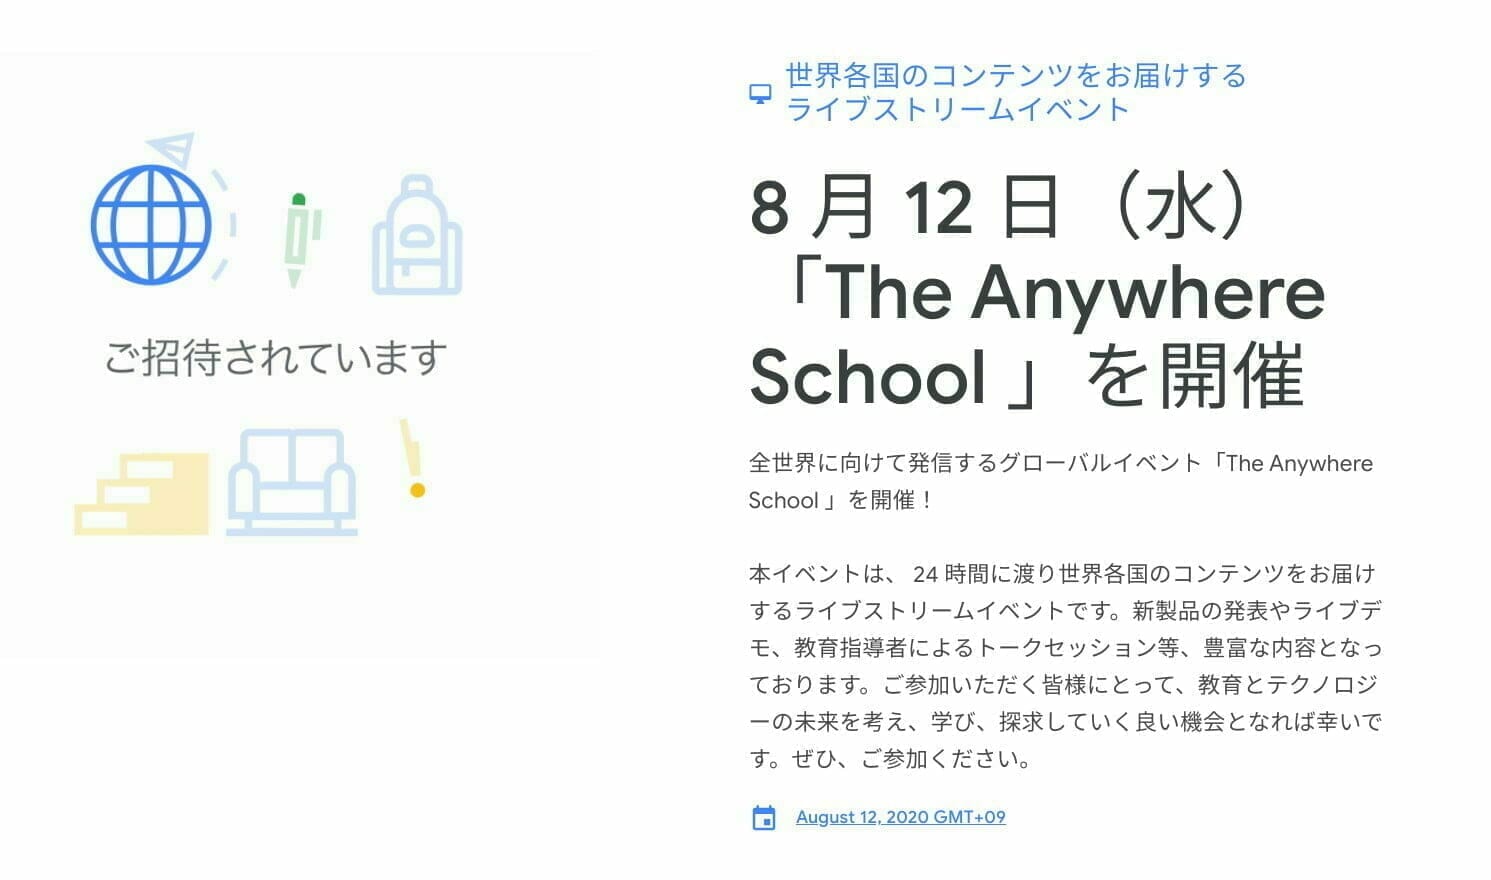 The Anywhere School